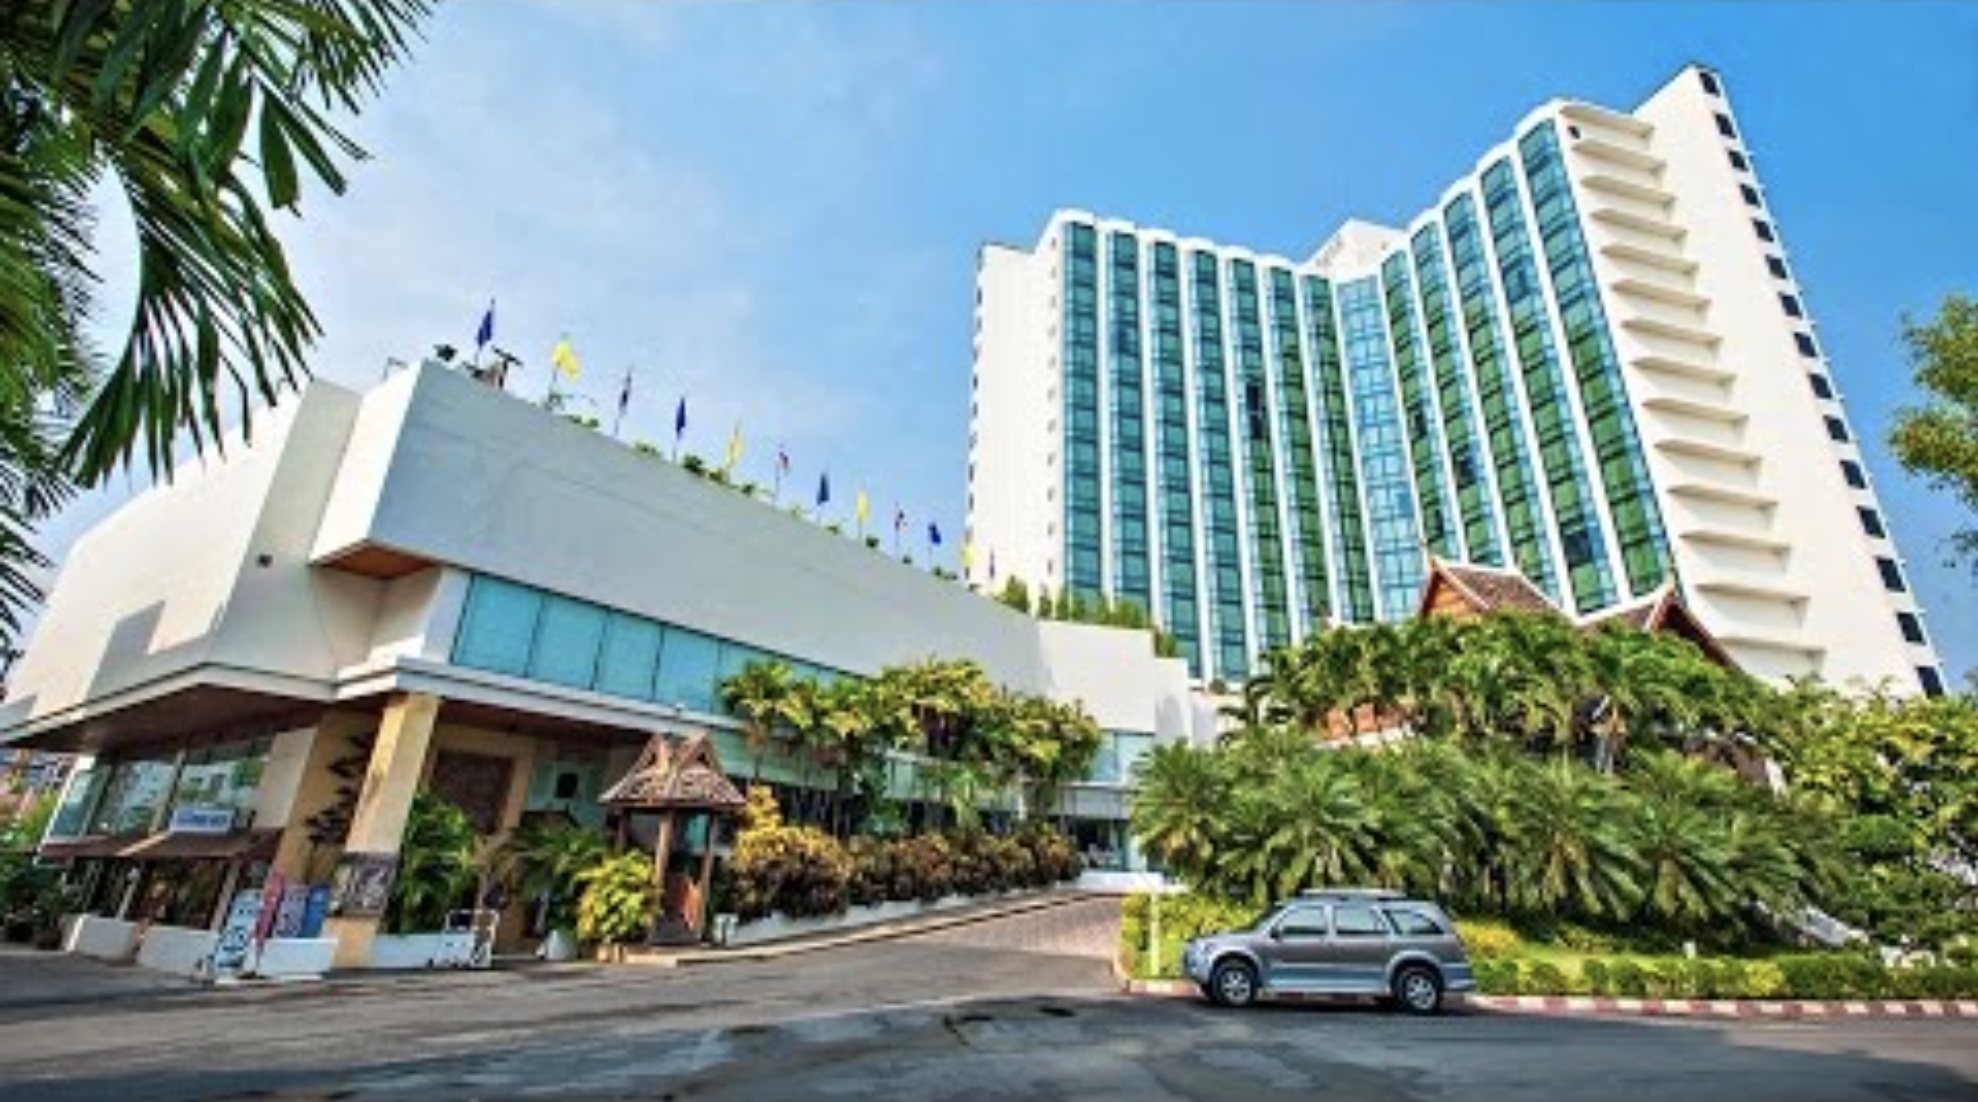 Main entrance of Empress Hotel, Chiang Mai, Thailand